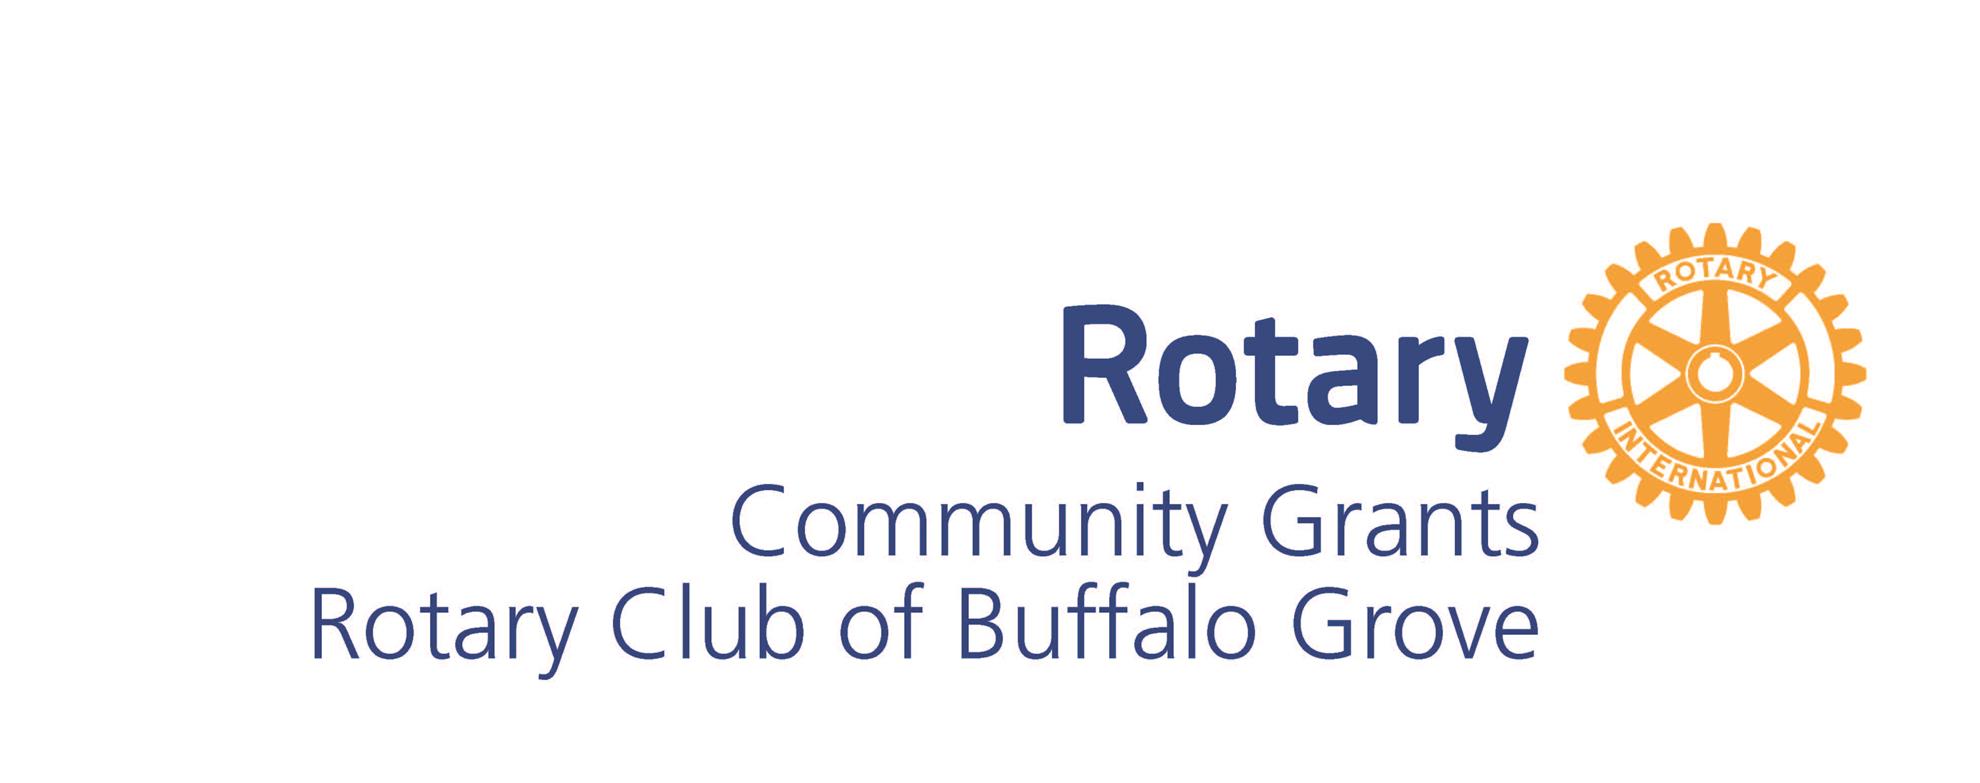 Rotary Community Grants Now Available! | Rotary Club of Buffalo Grove